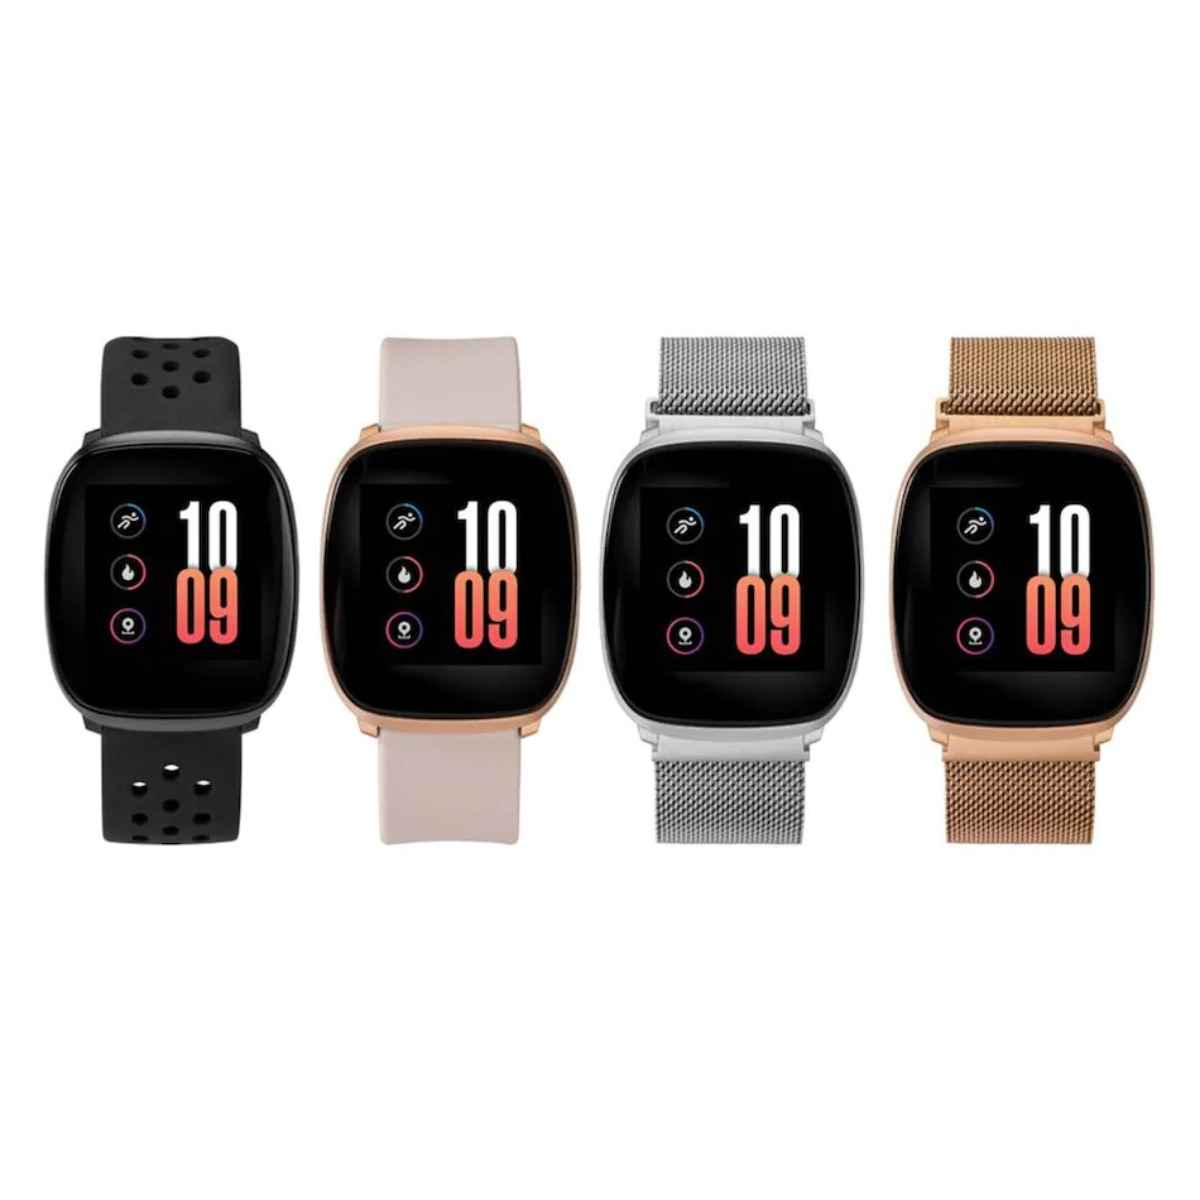 Timex iConnect Premium Active smartwatch